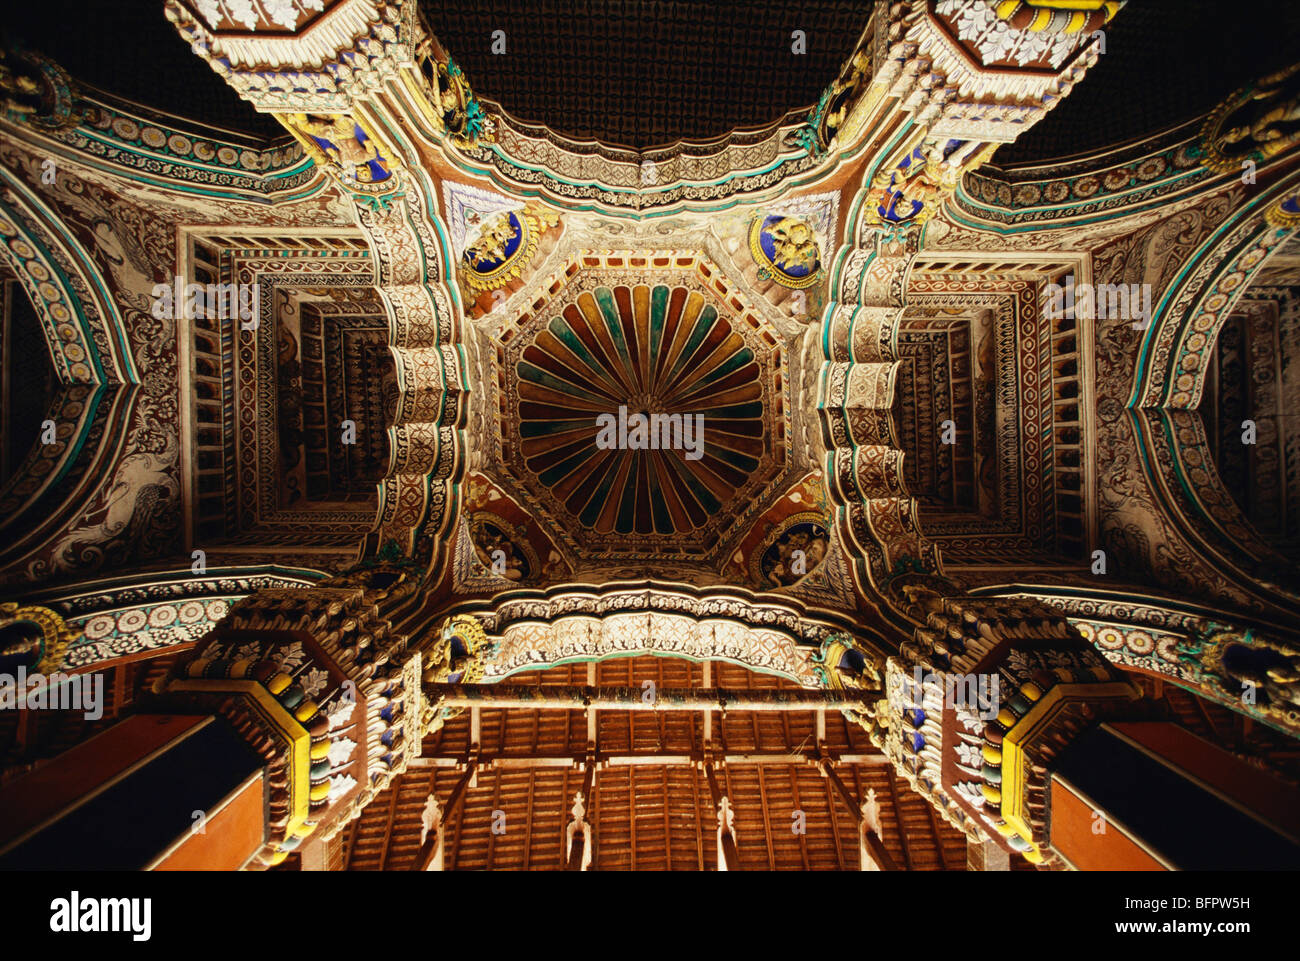 66497 AAD : plafond peint de Darbar Hall ; Thanjavur Tanjavur Tamil Nadu ; Inde ; Banque D'Images